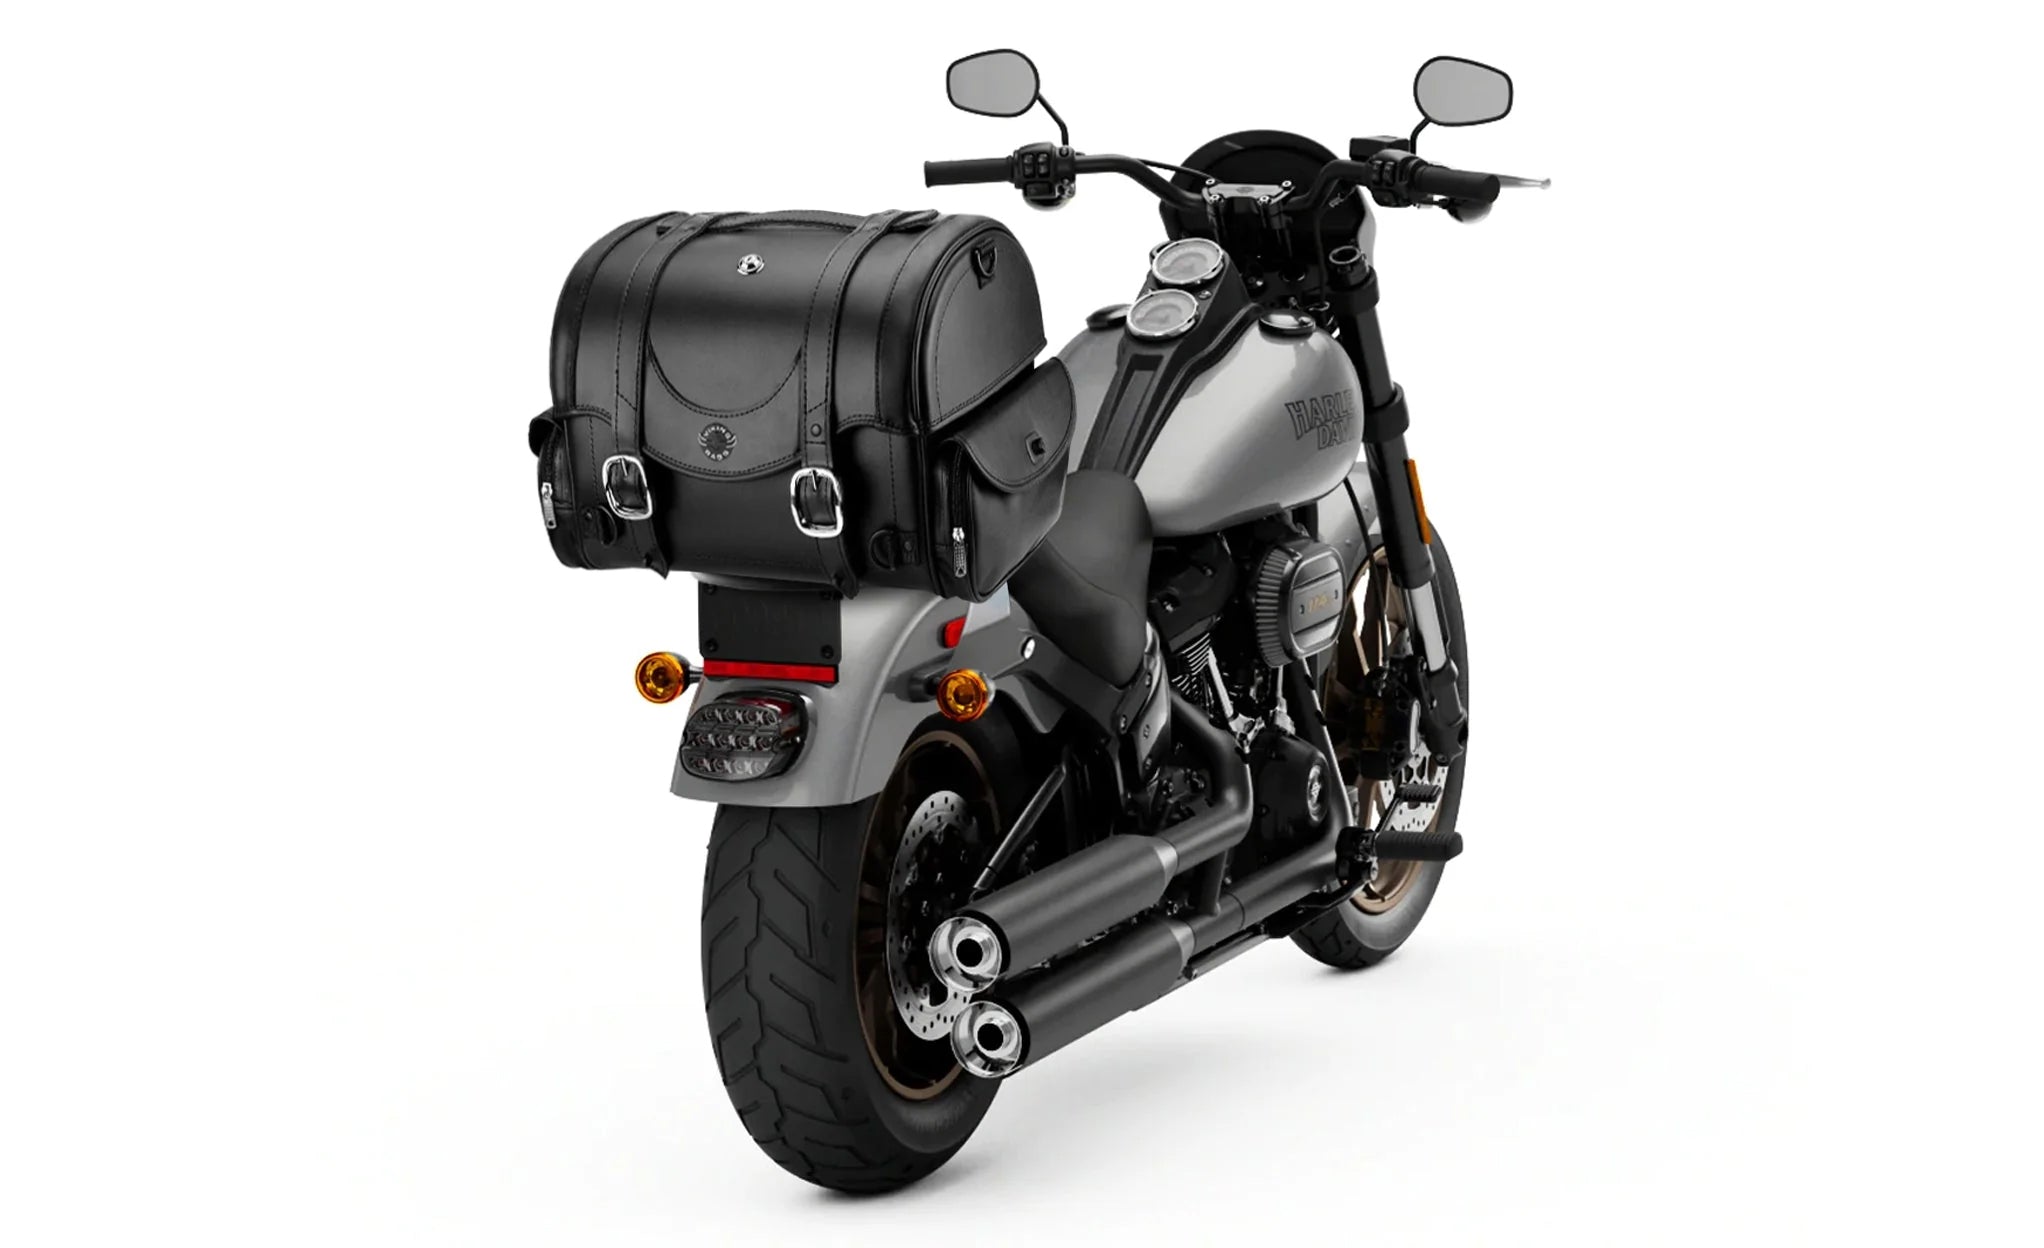 21L - Century Medium Leather Motorcycle Tail Bag on Bike Photo @expand